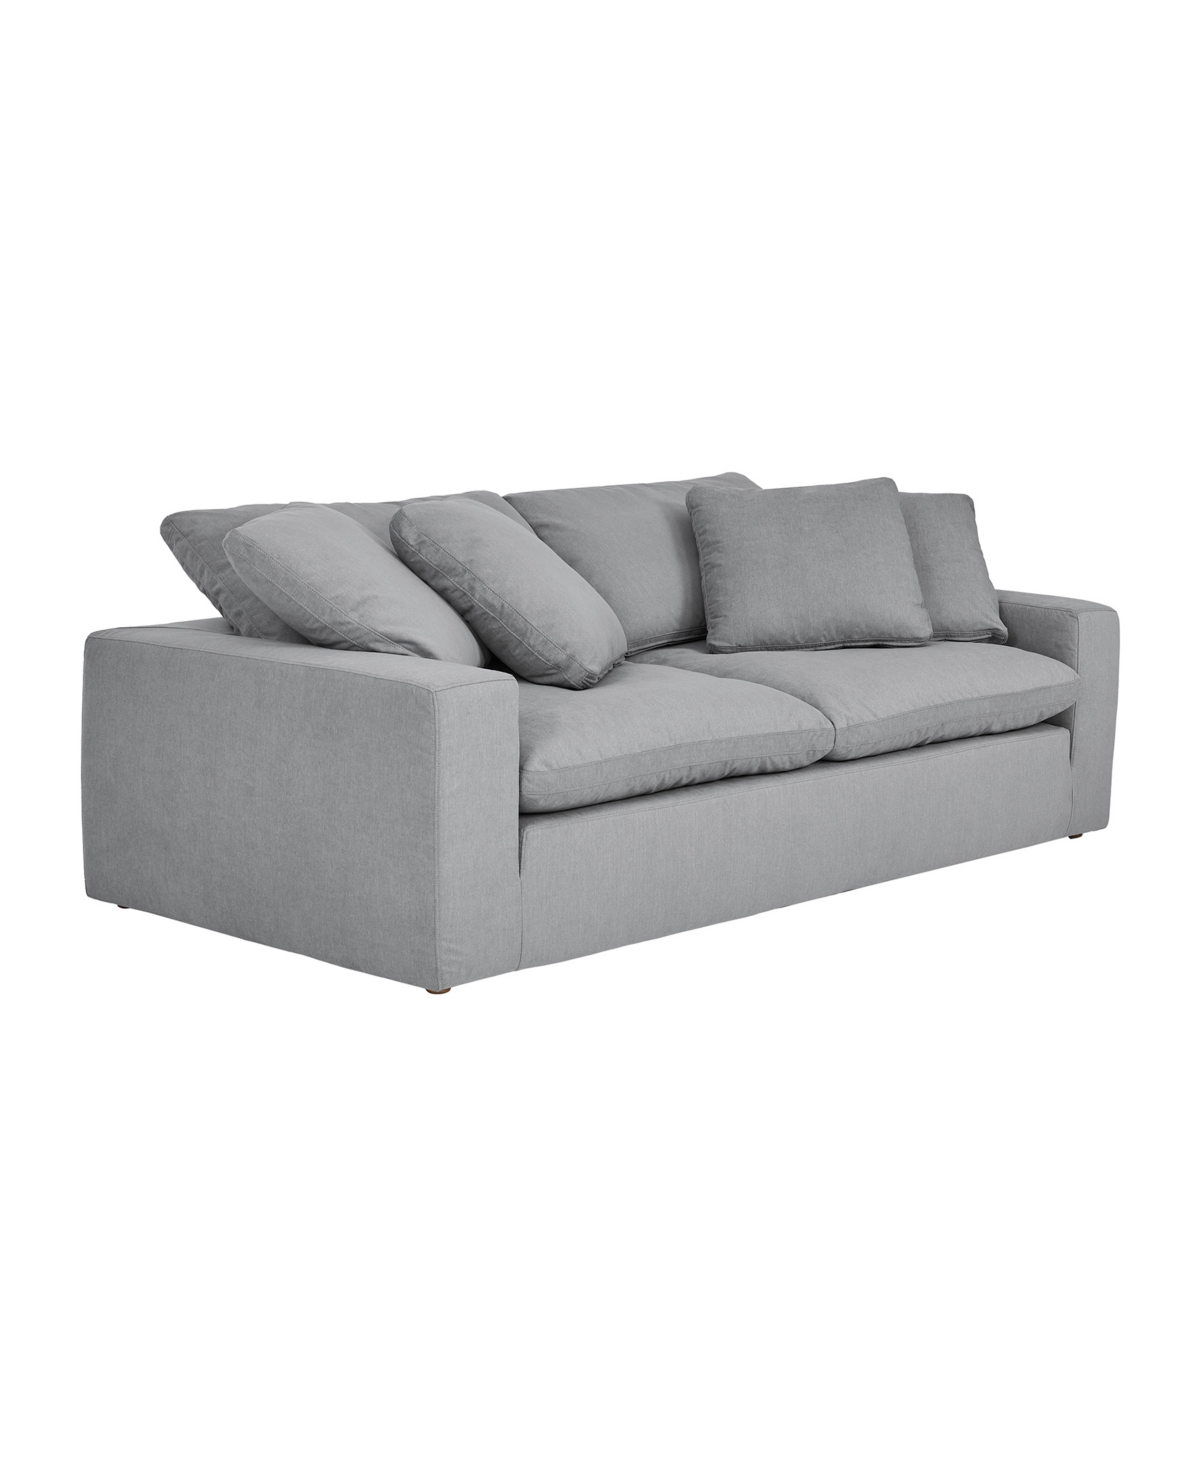 Armen Living Liberty 96.5" Upholstered Sofa In Slate Gray,brown